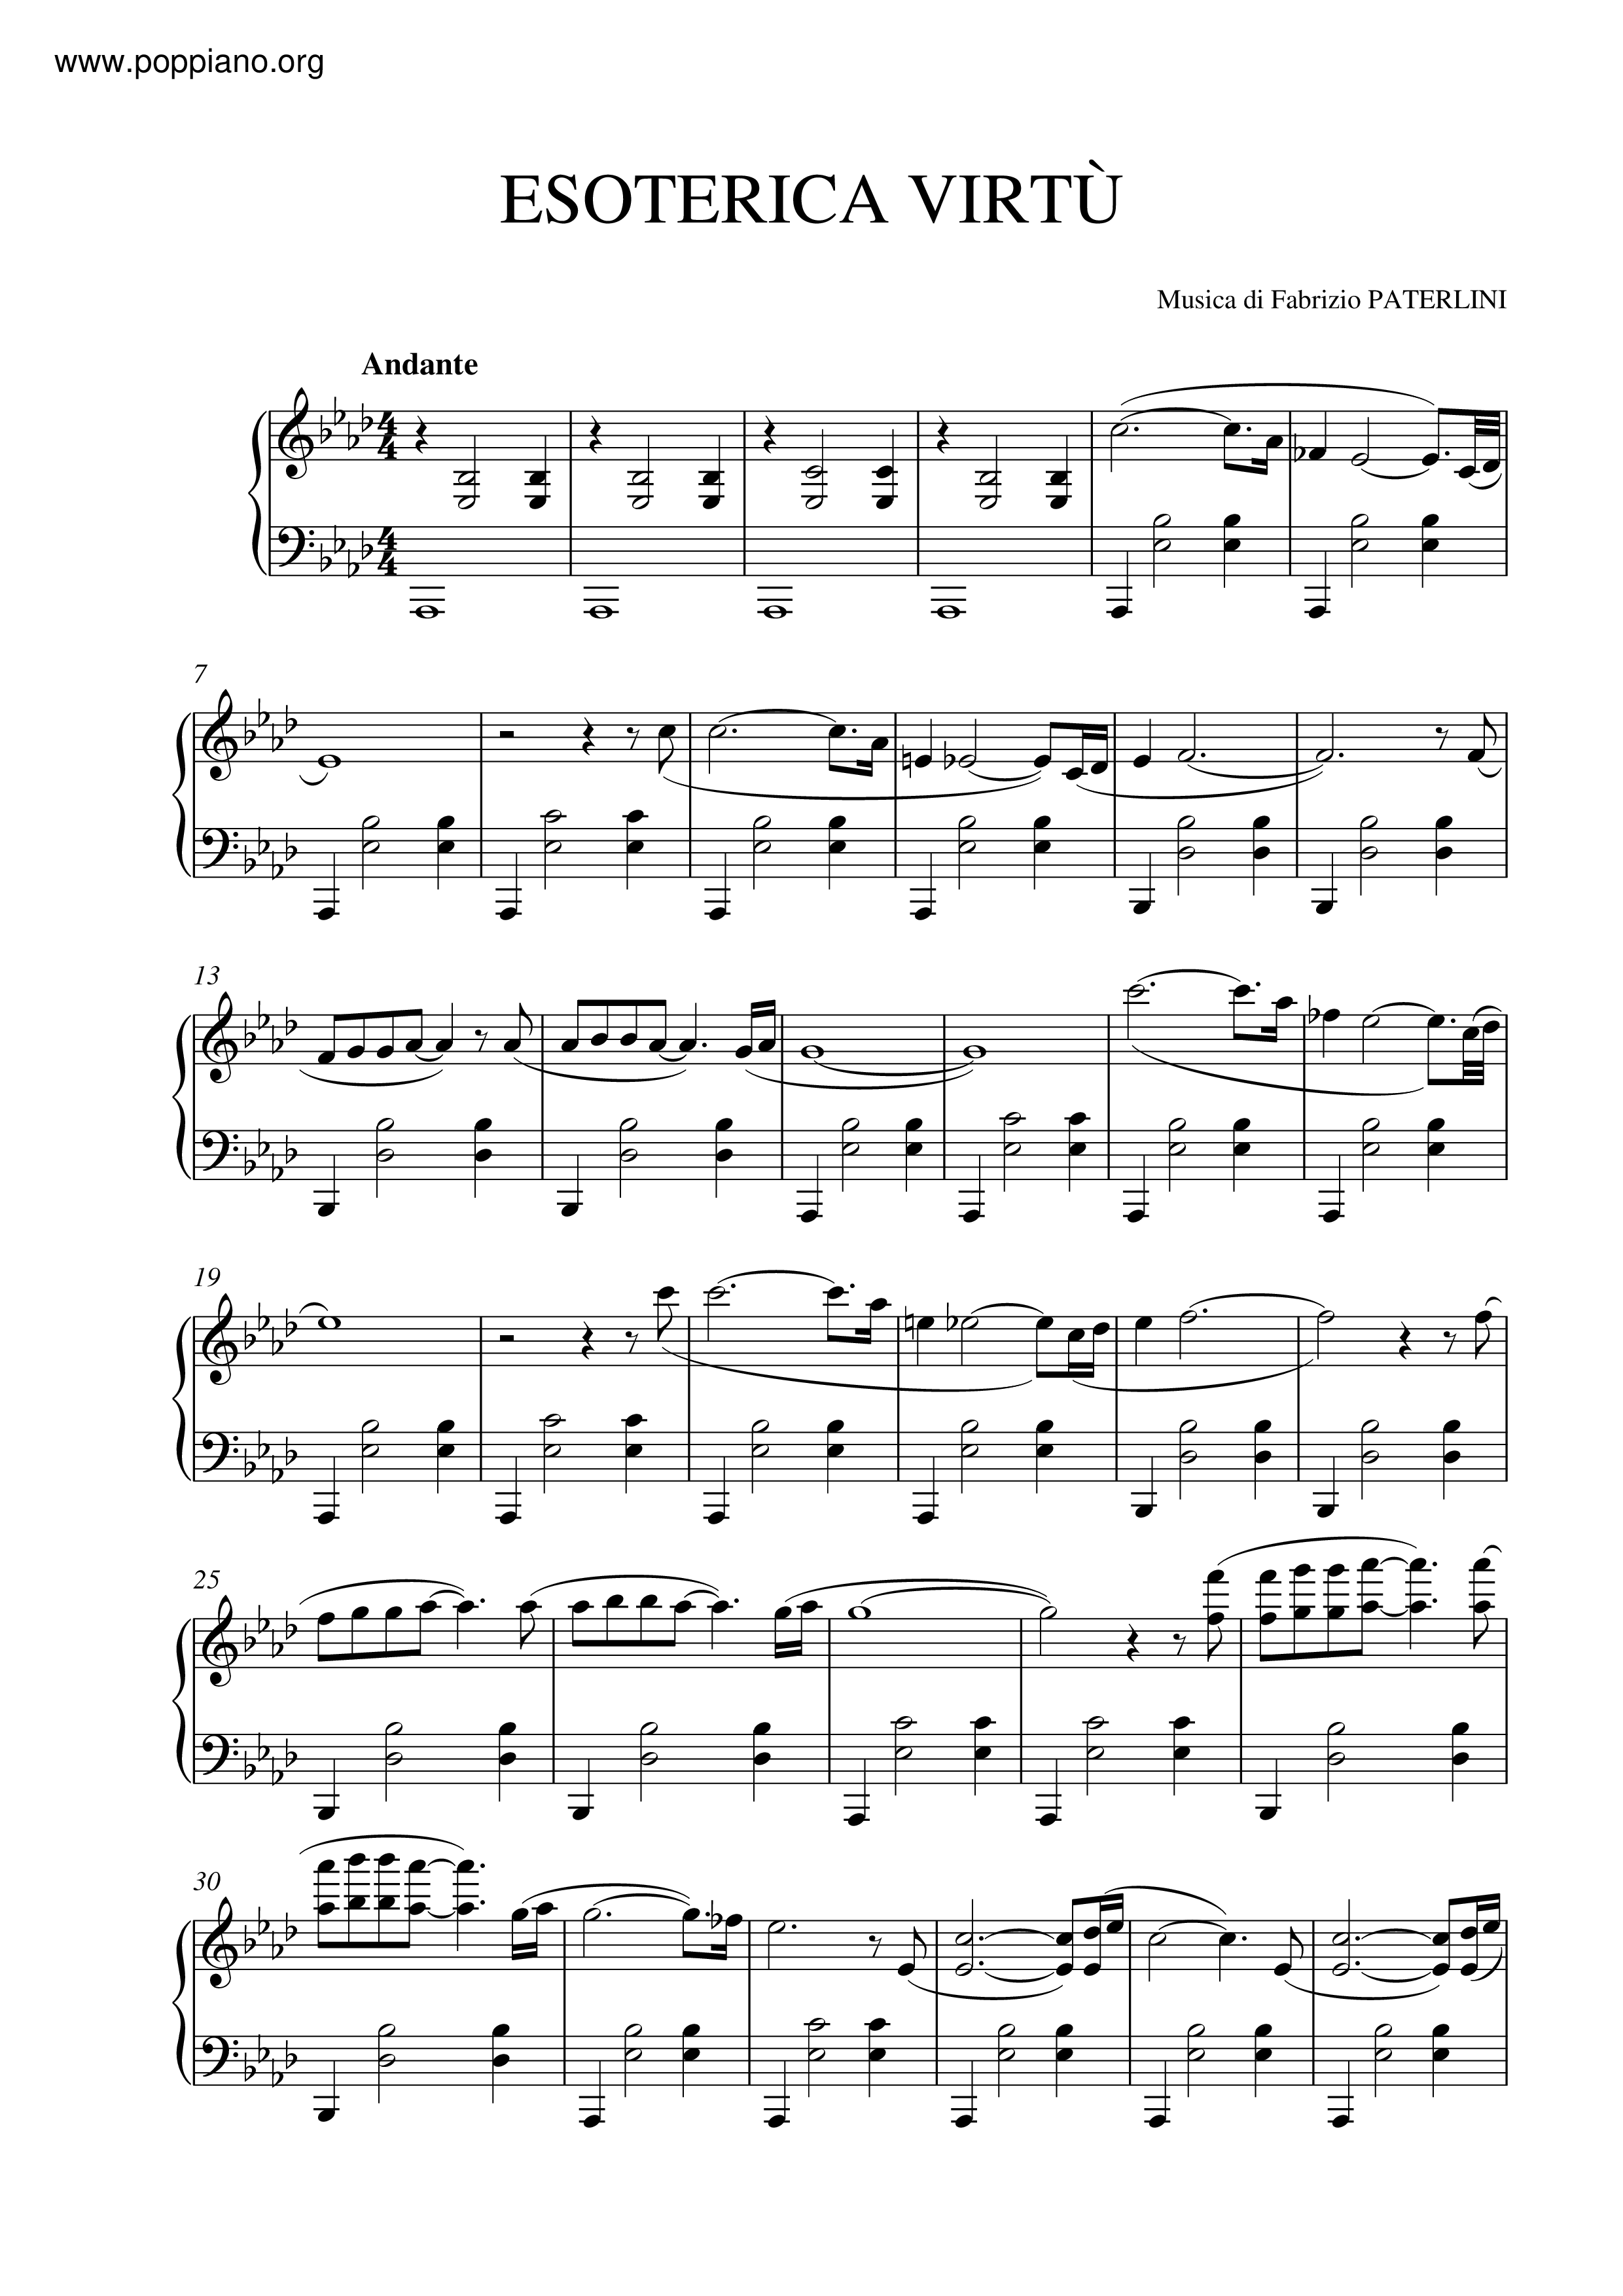 Esoterica Virtuピアノ譜